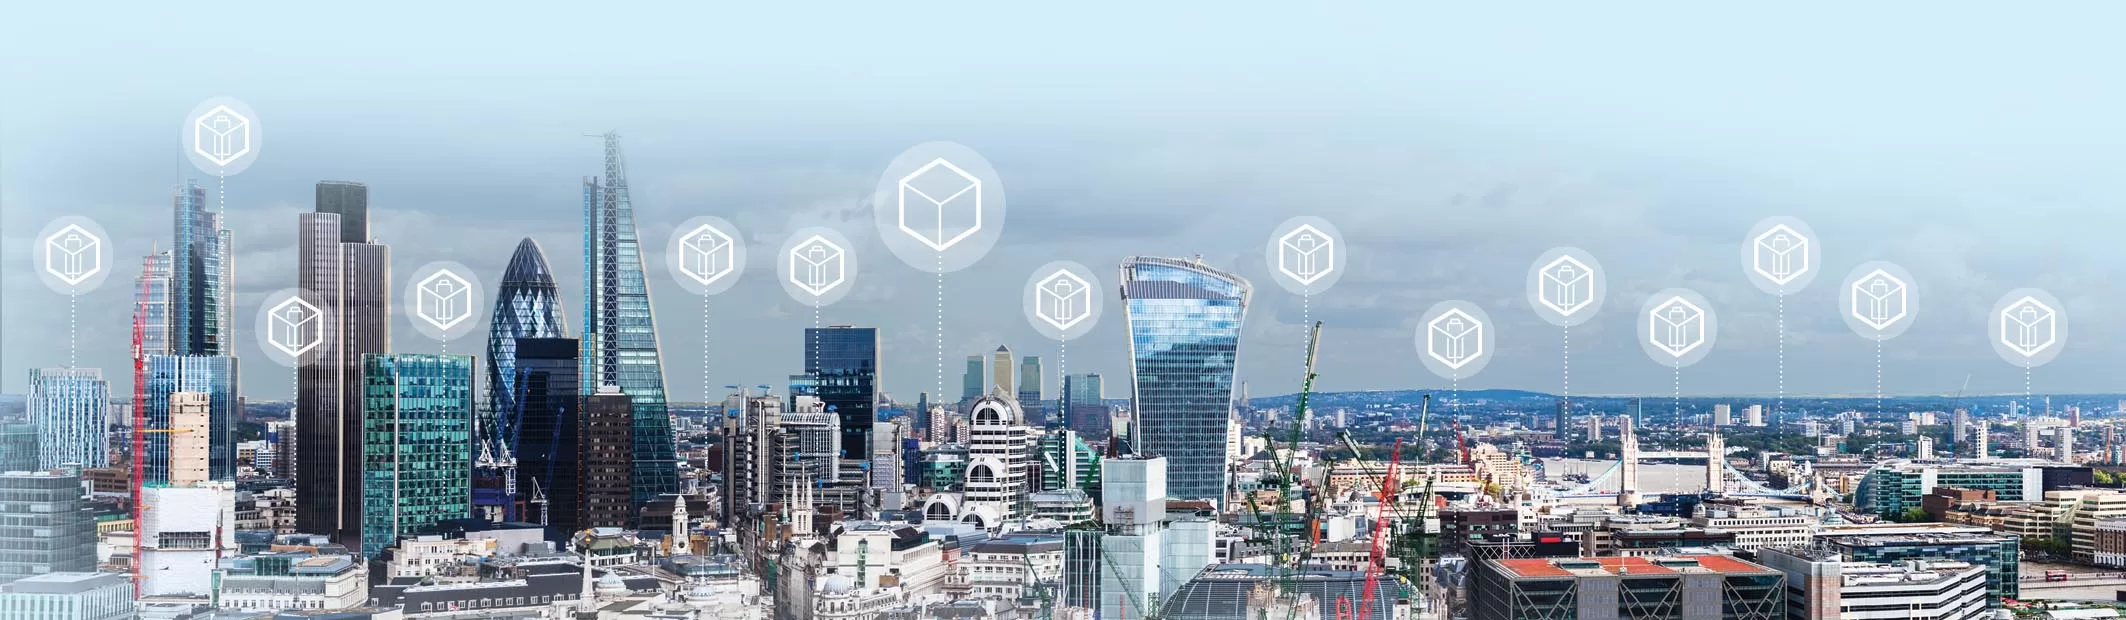 Iot framework smart city